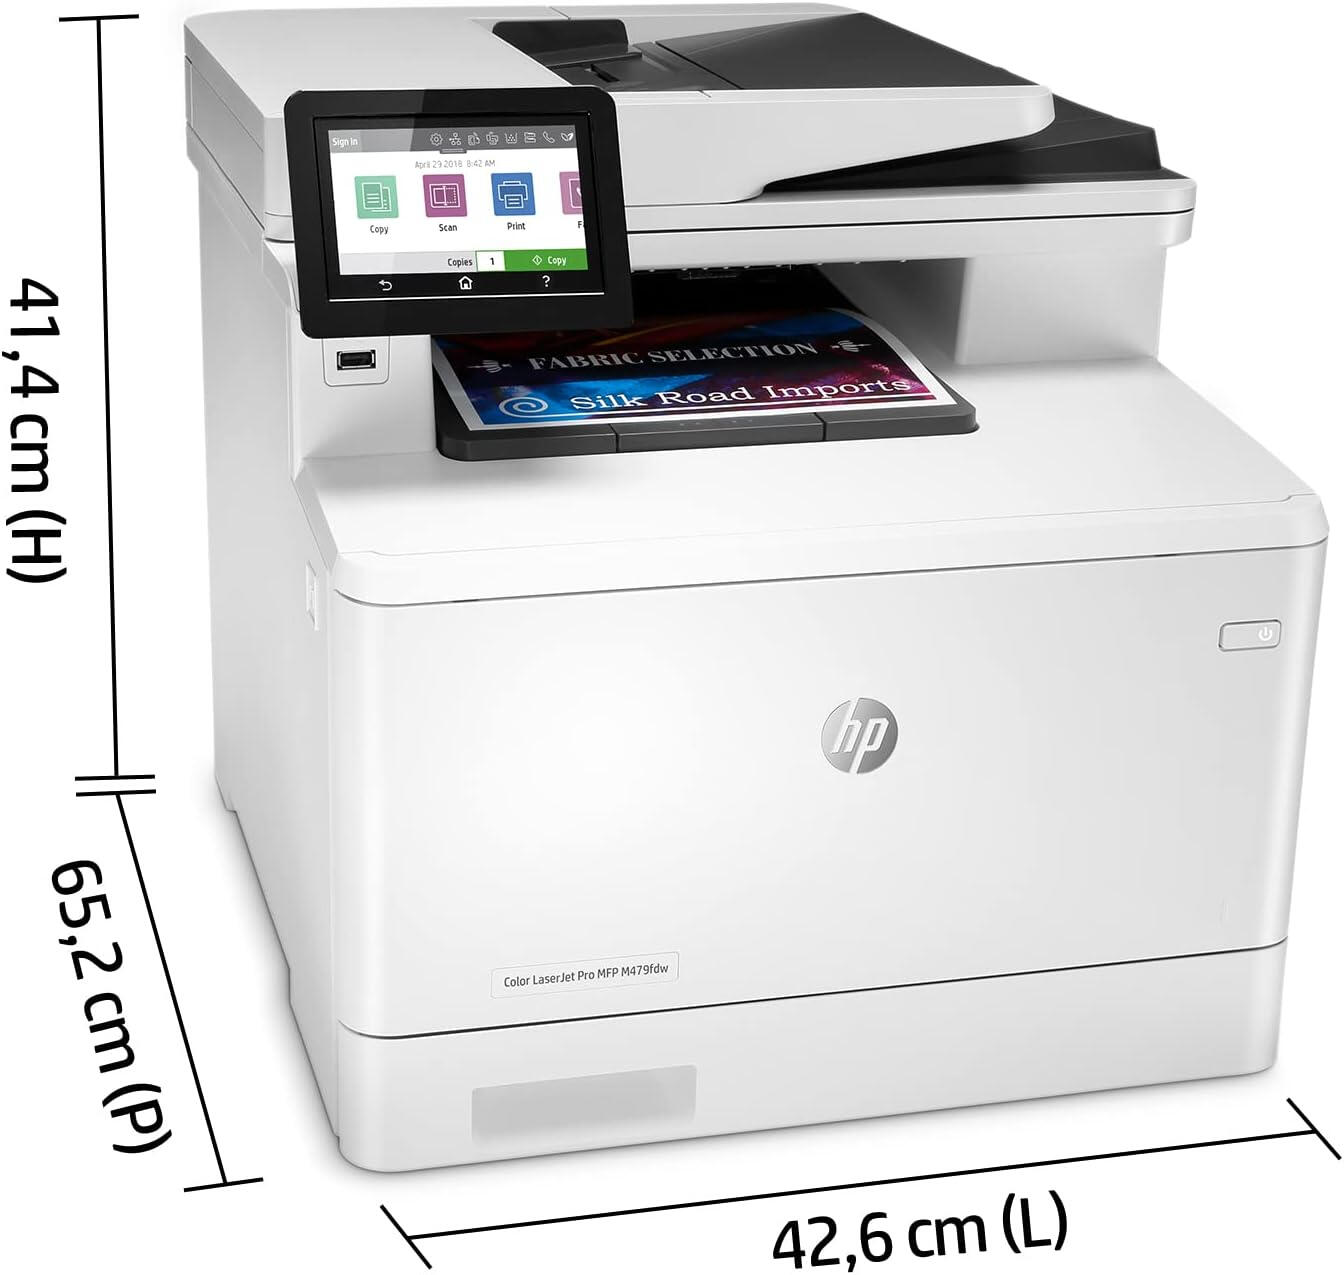 HP Color LaserJet Pro printer